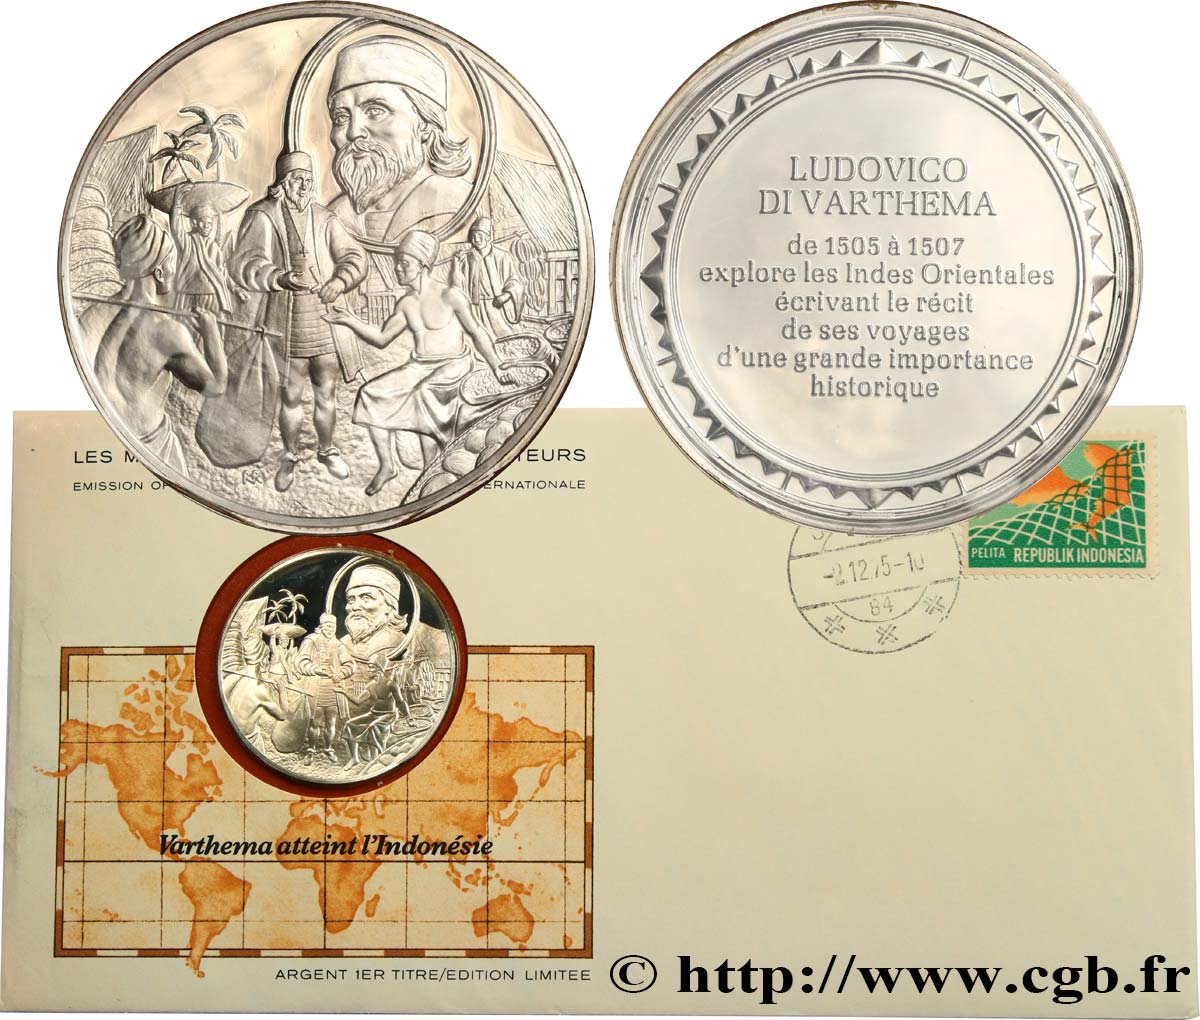 THE GREAT EXPLORERS  MEDALS Enveloppe “Timbre médaille”, Varthema atteint l’Indonésie fST